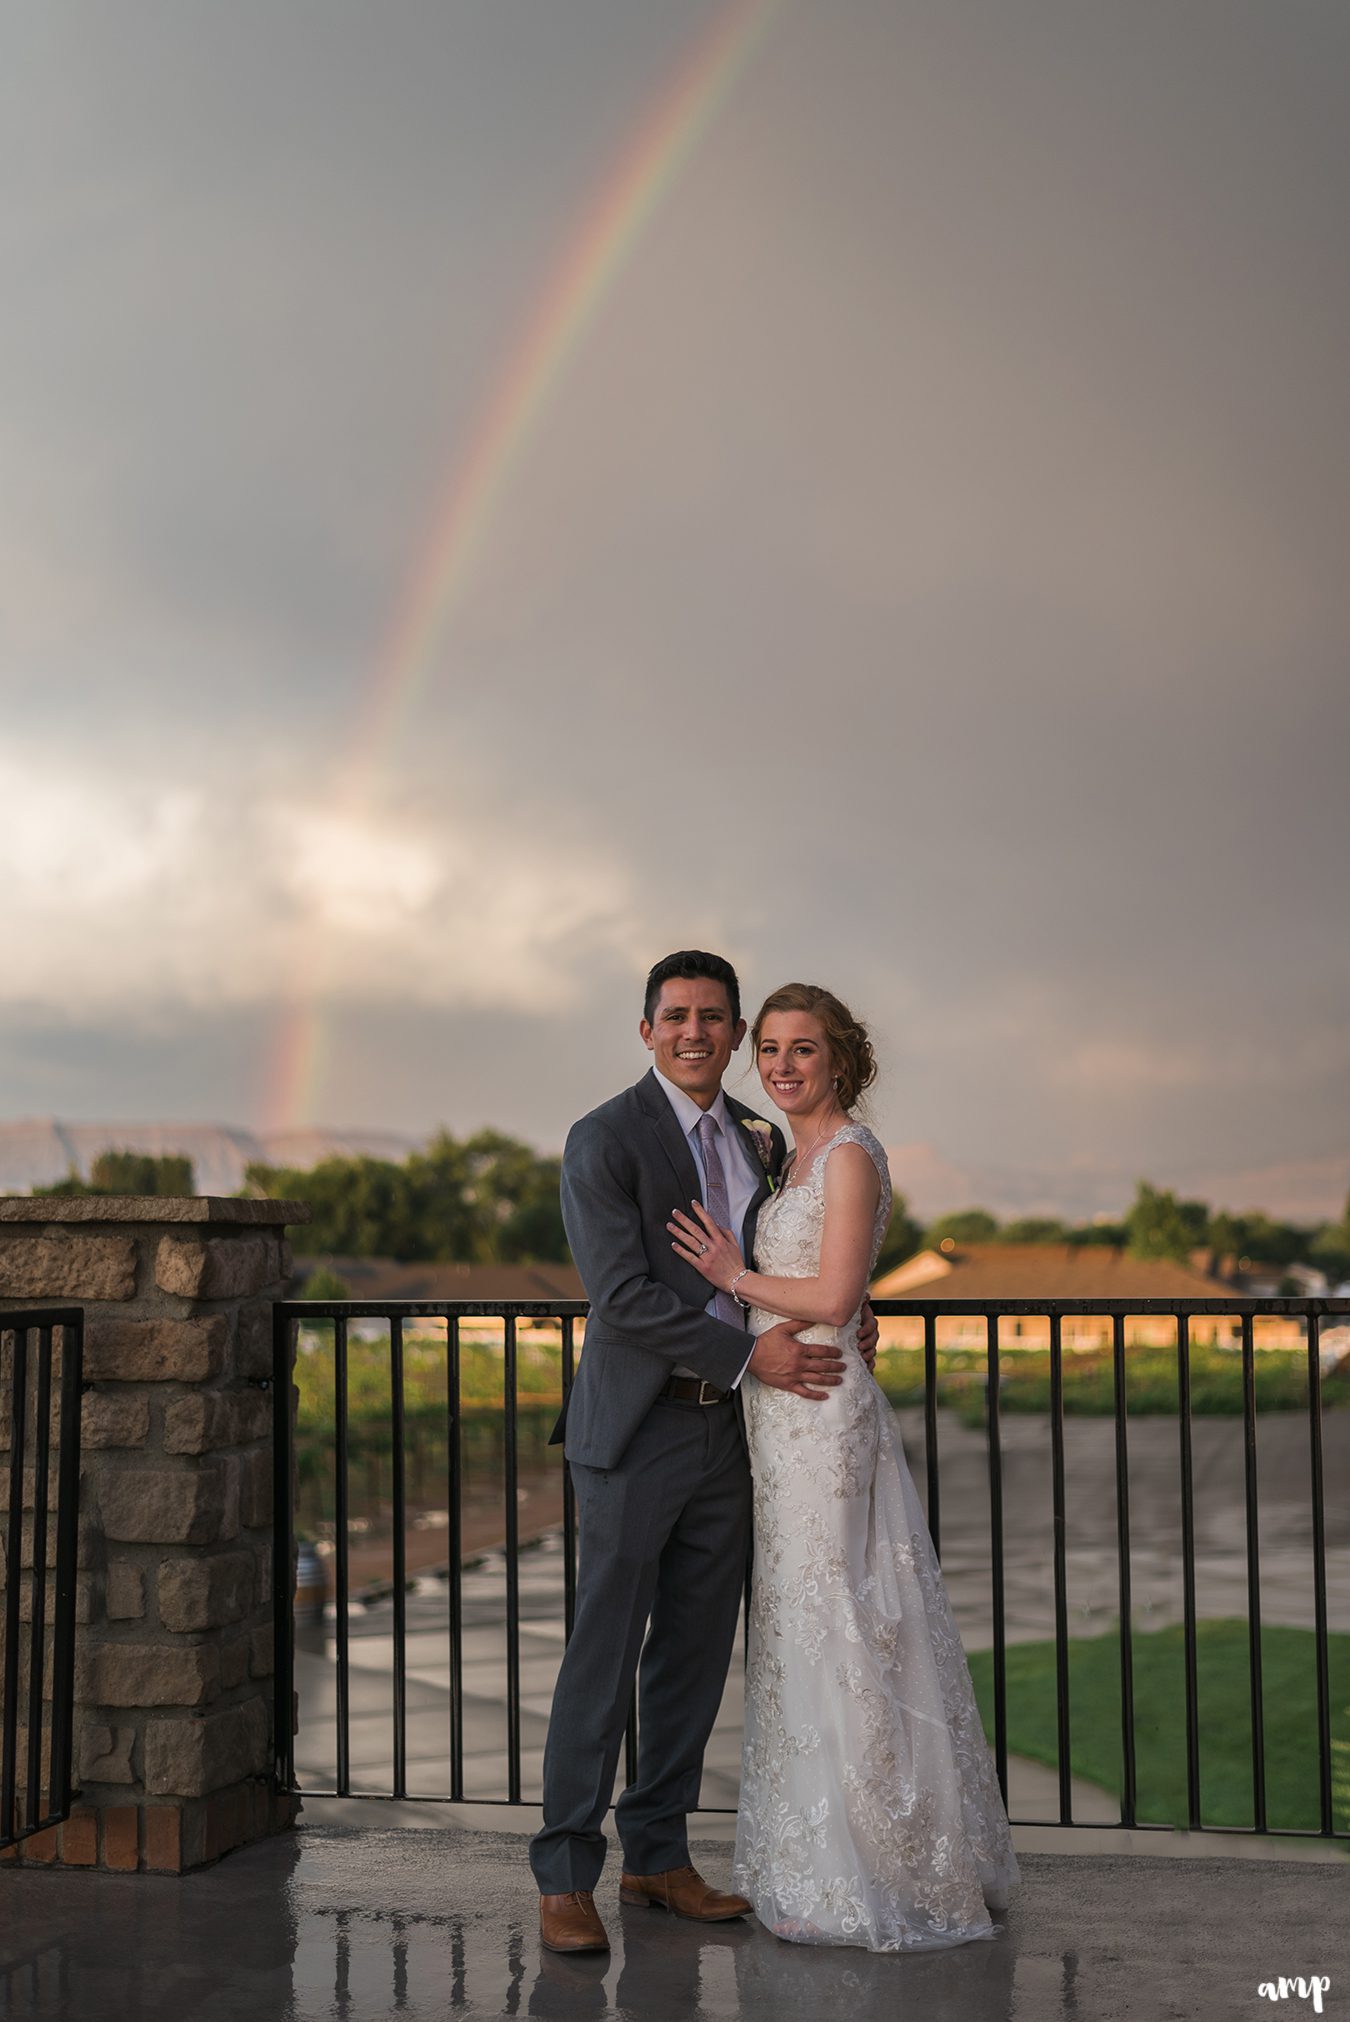 Bride and groom beneath a rainbow on their wedding day